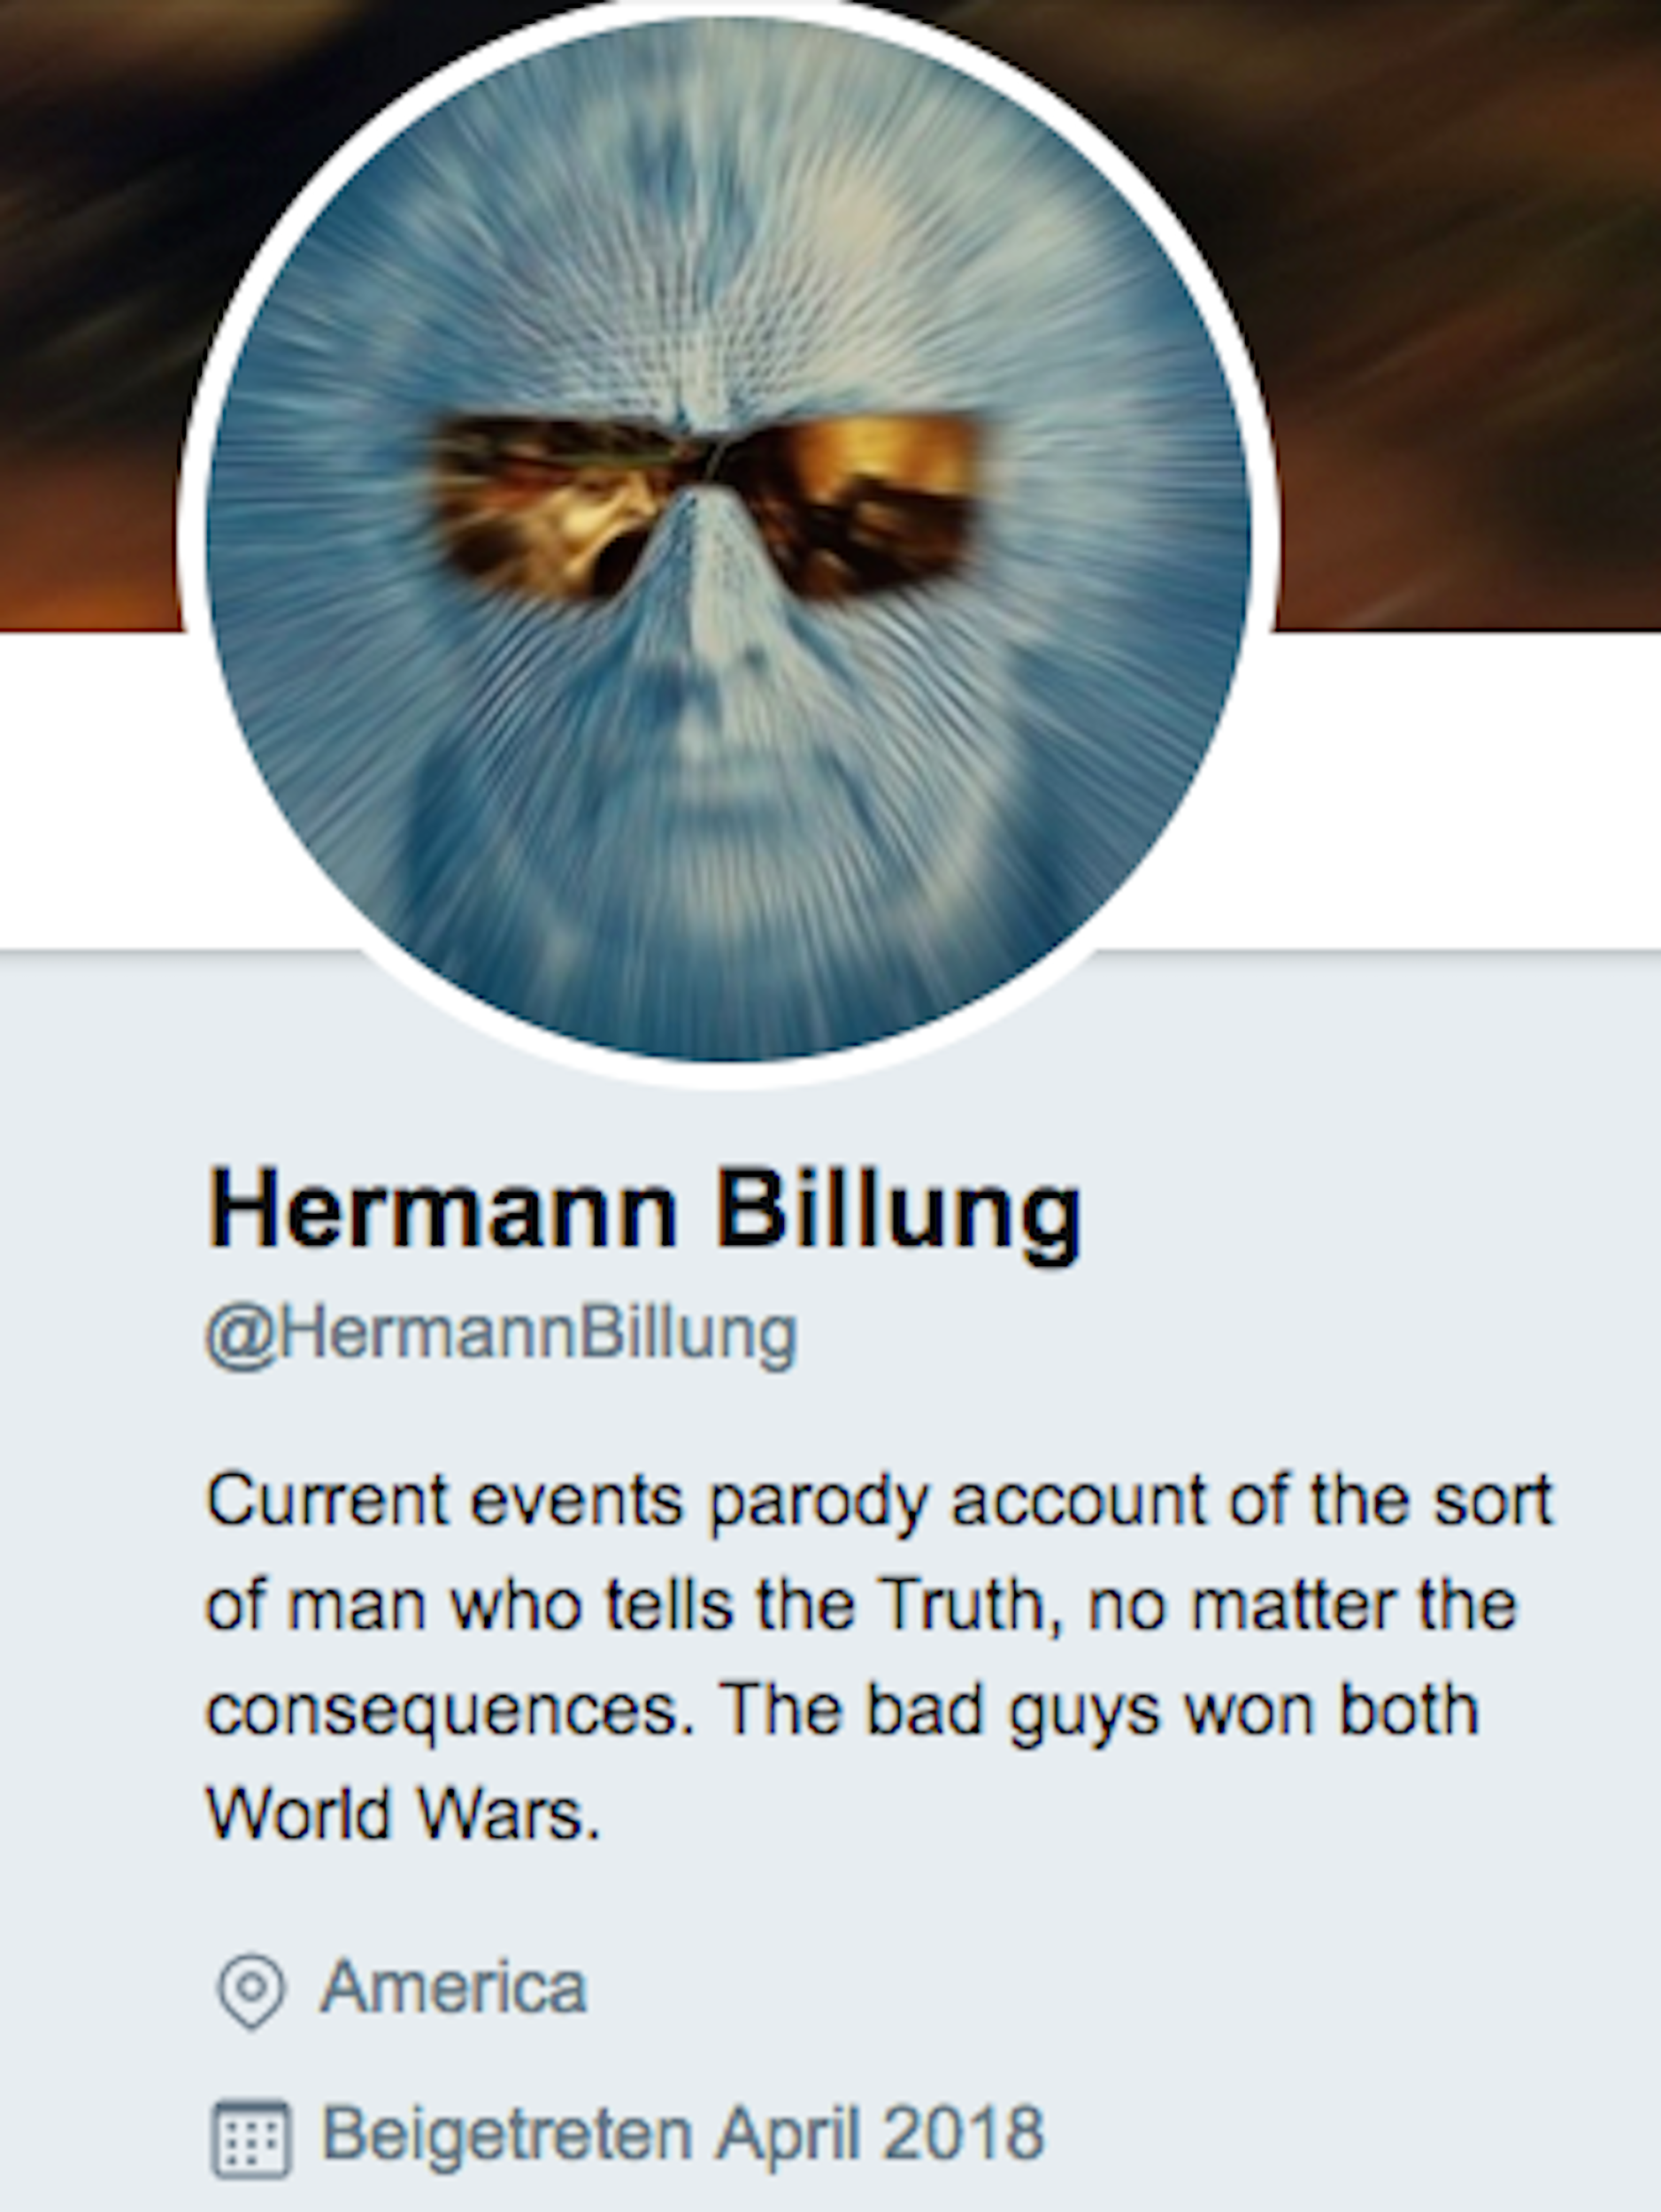 Twitter profile pic of "Hermann Billung." Pic = blue cartoon of man wearing sunglasses looking like it's in motion.